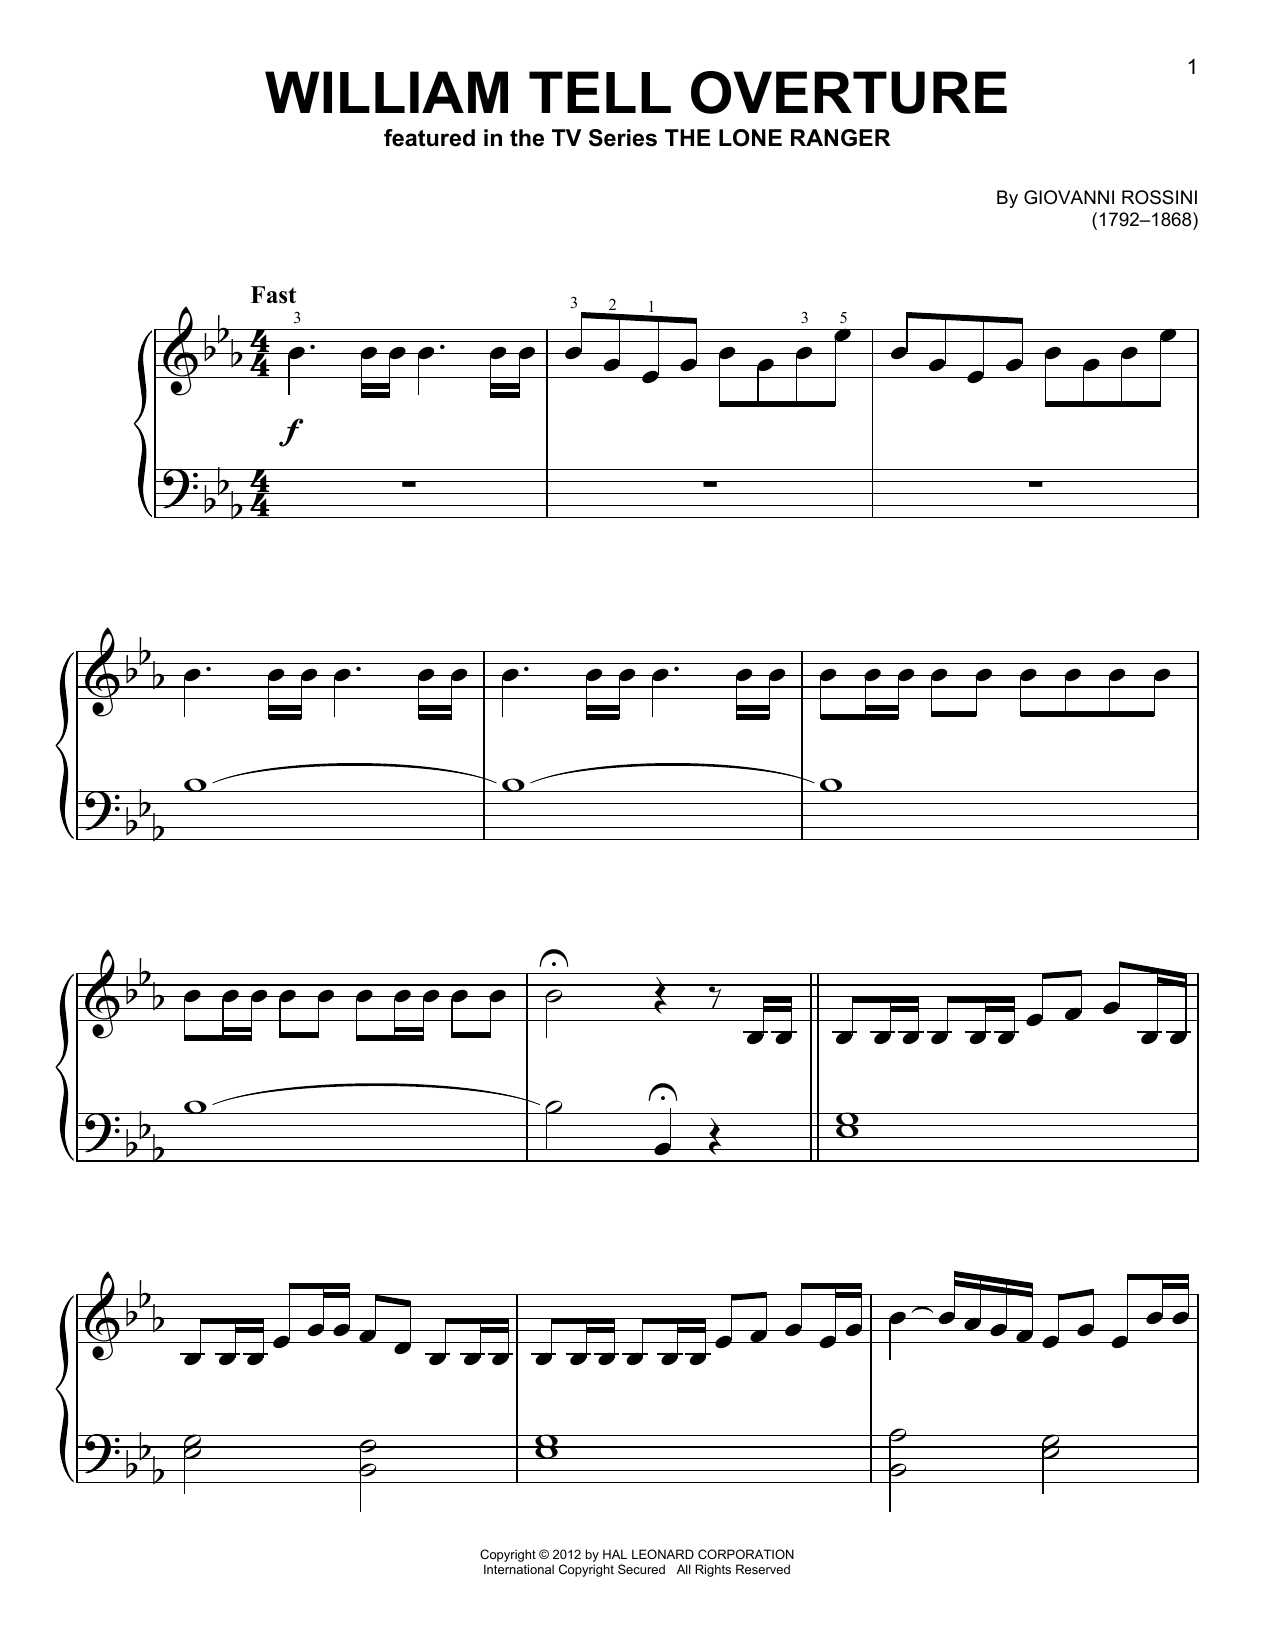 Download Gioachino Rossini William Tell Overture Sheet Music